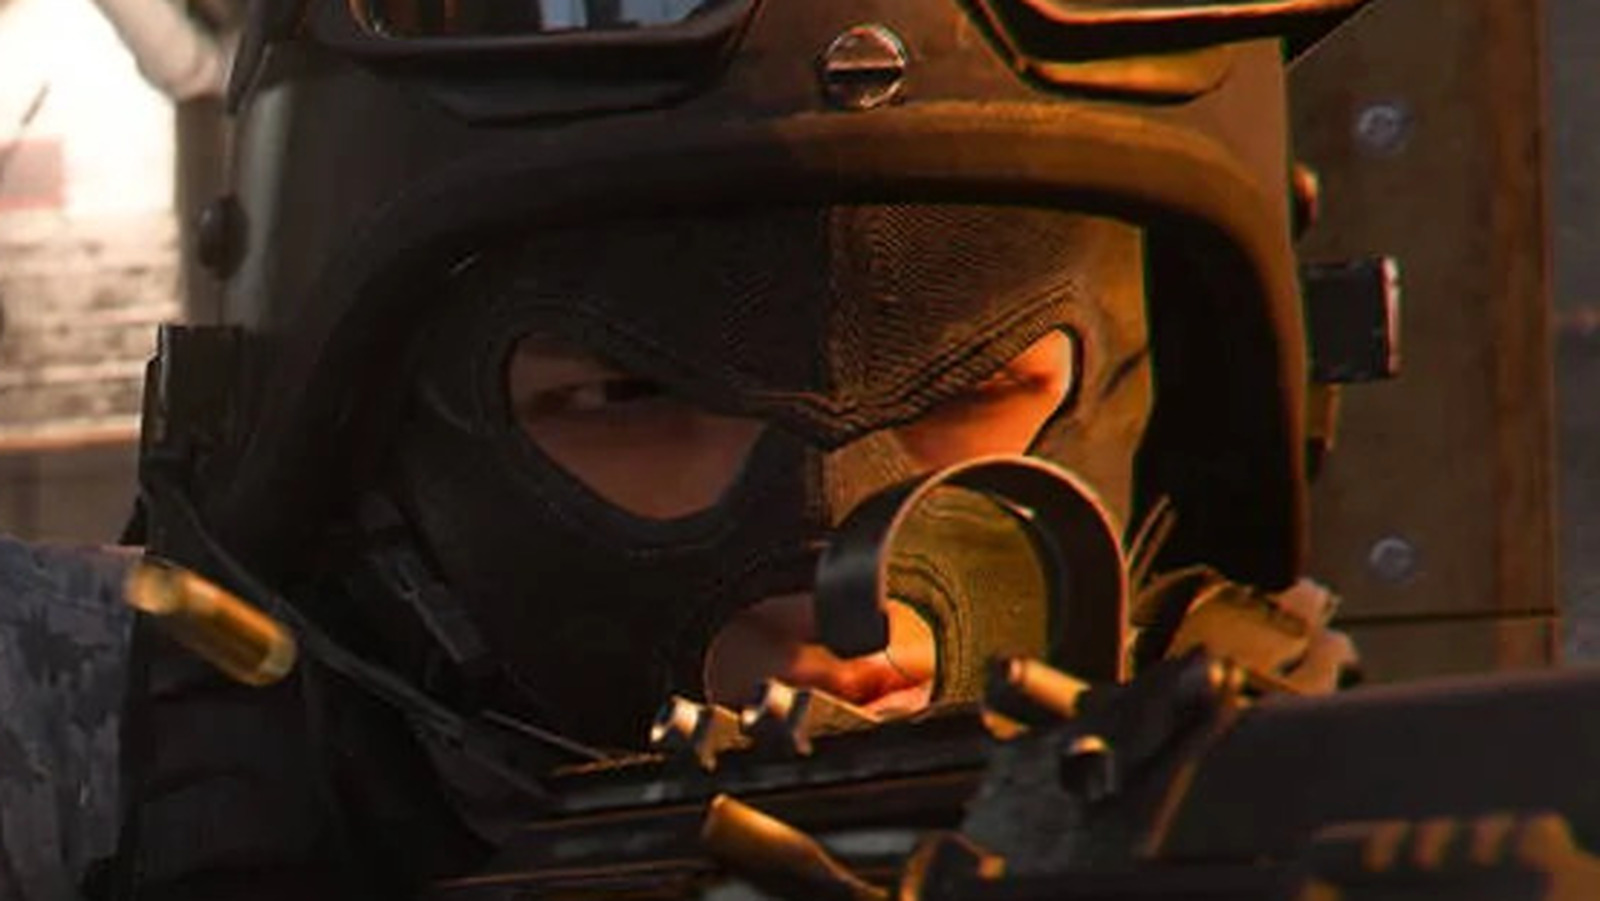 Modern Warfare 2, Warzone 2.0 Operators list and how to unlock them